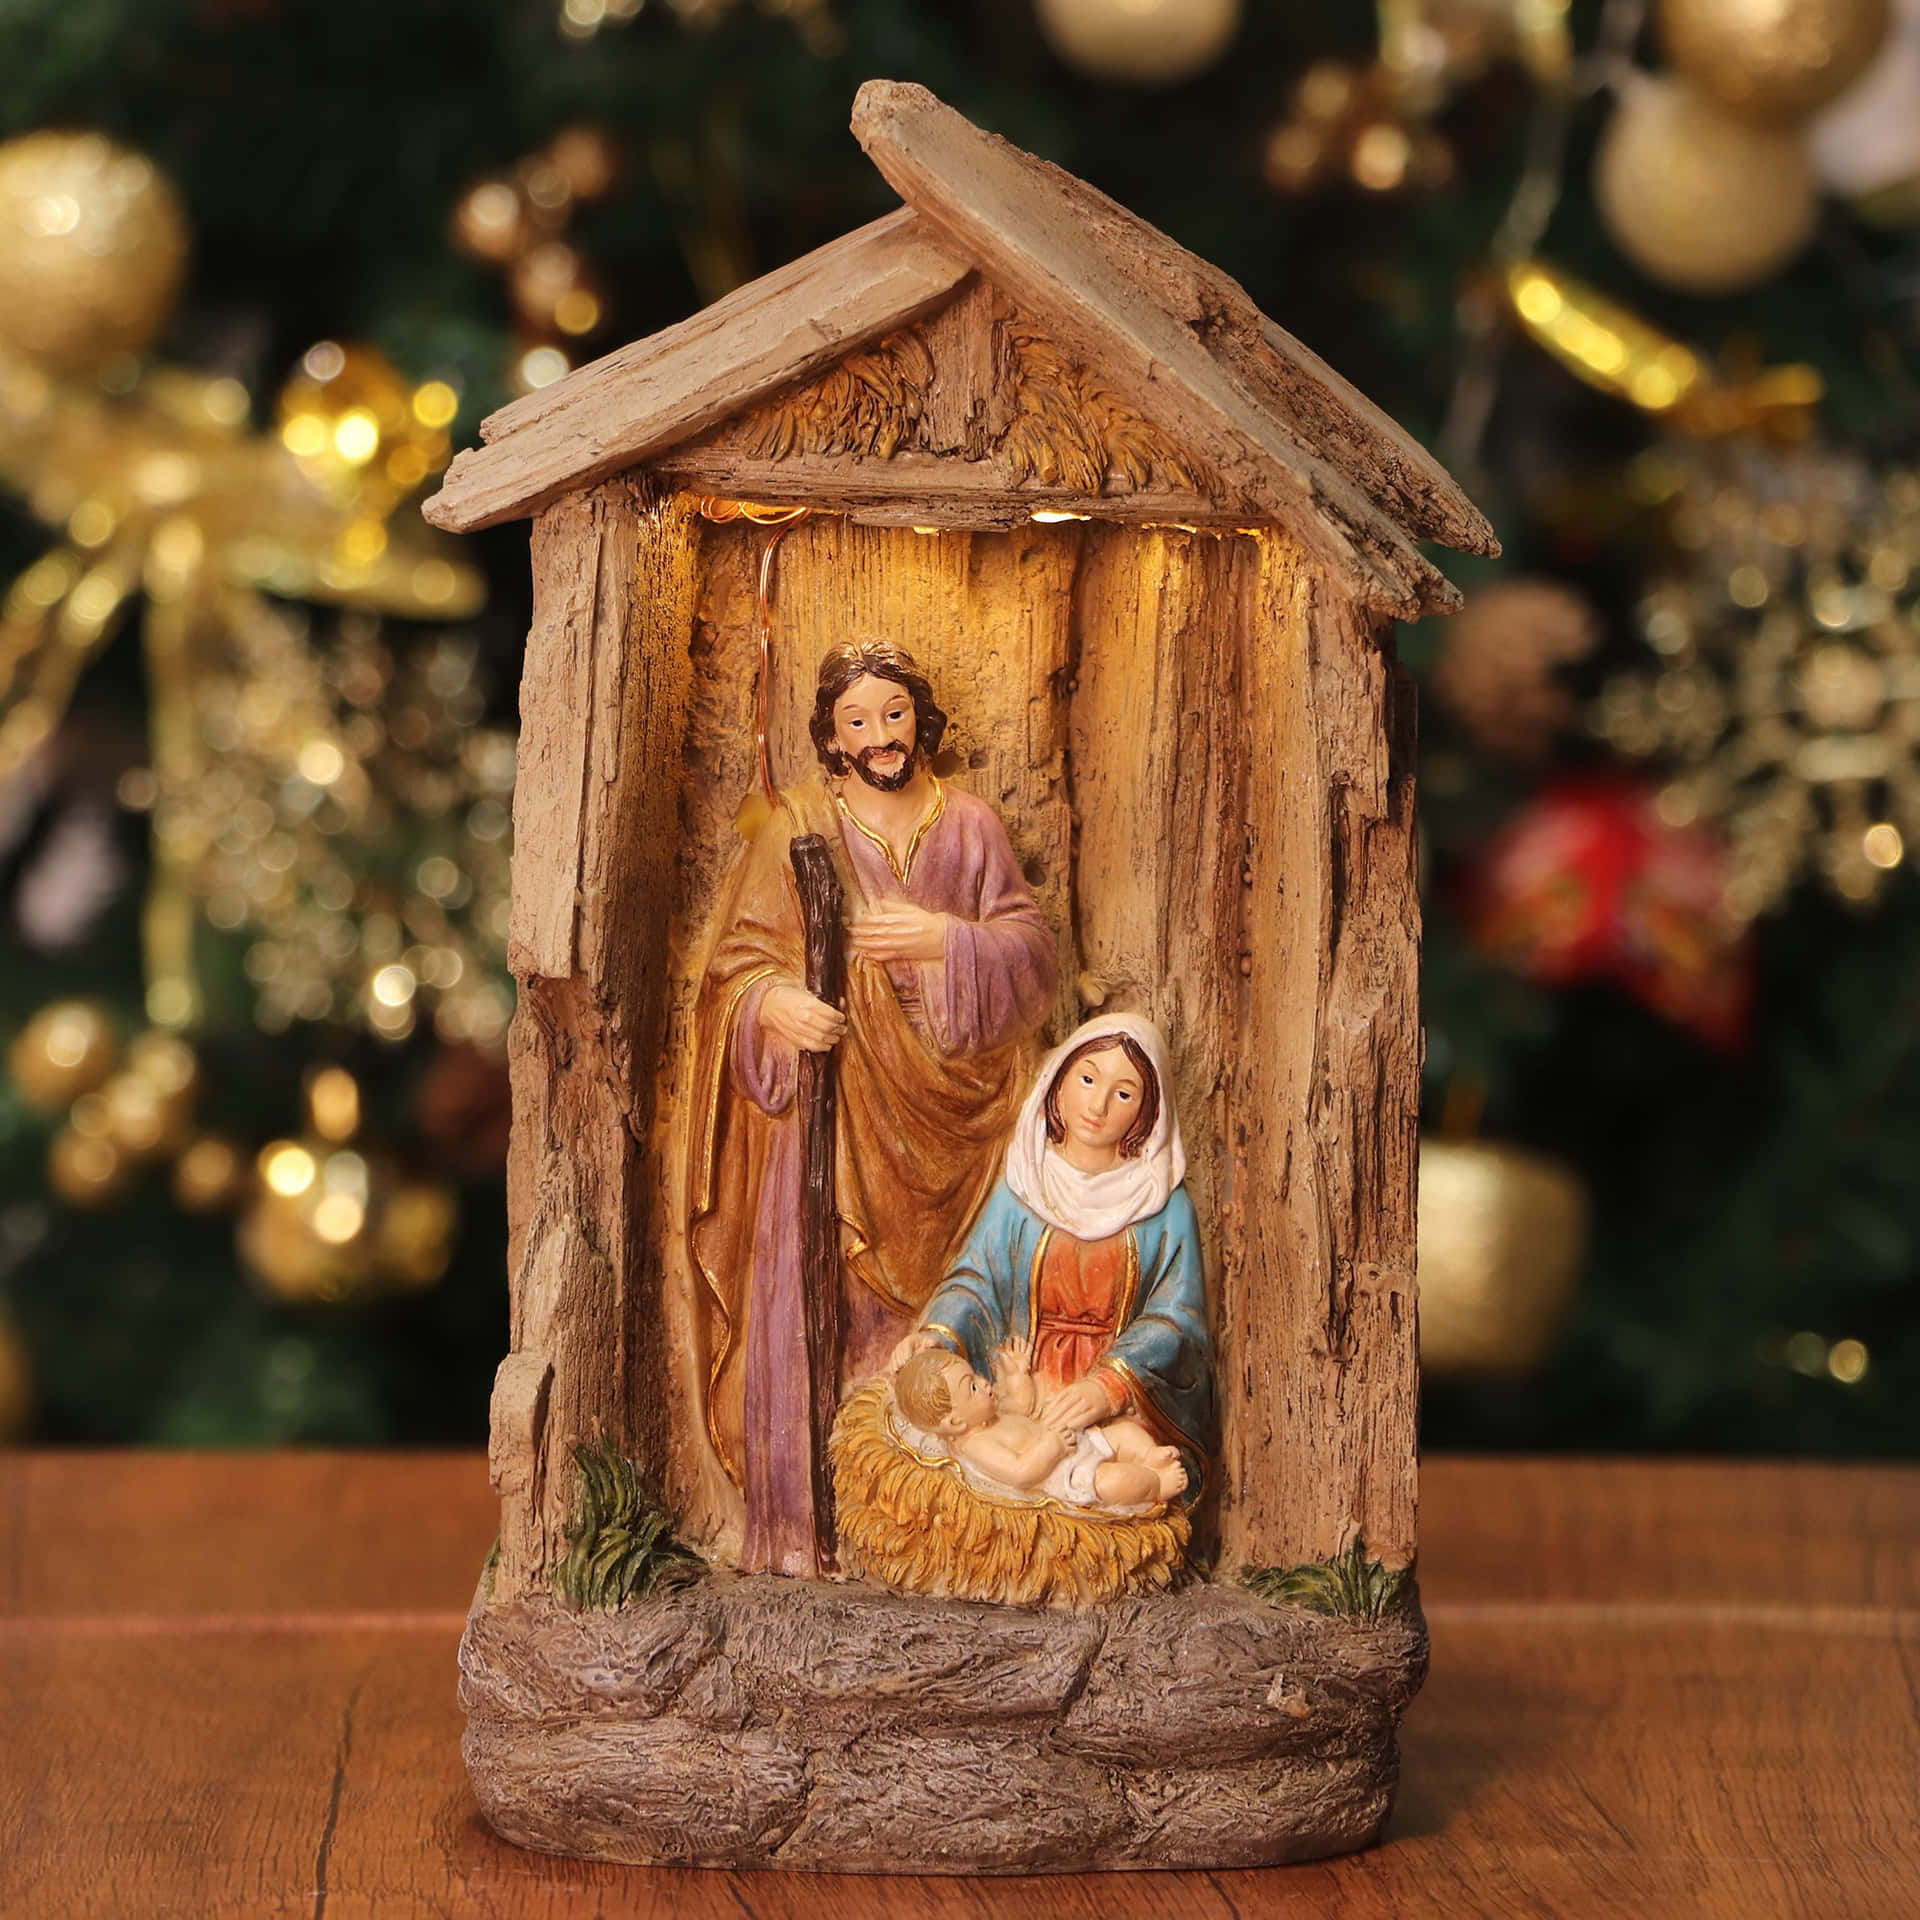 Celebrate the Holy Season with a Festive Nativity Scene.